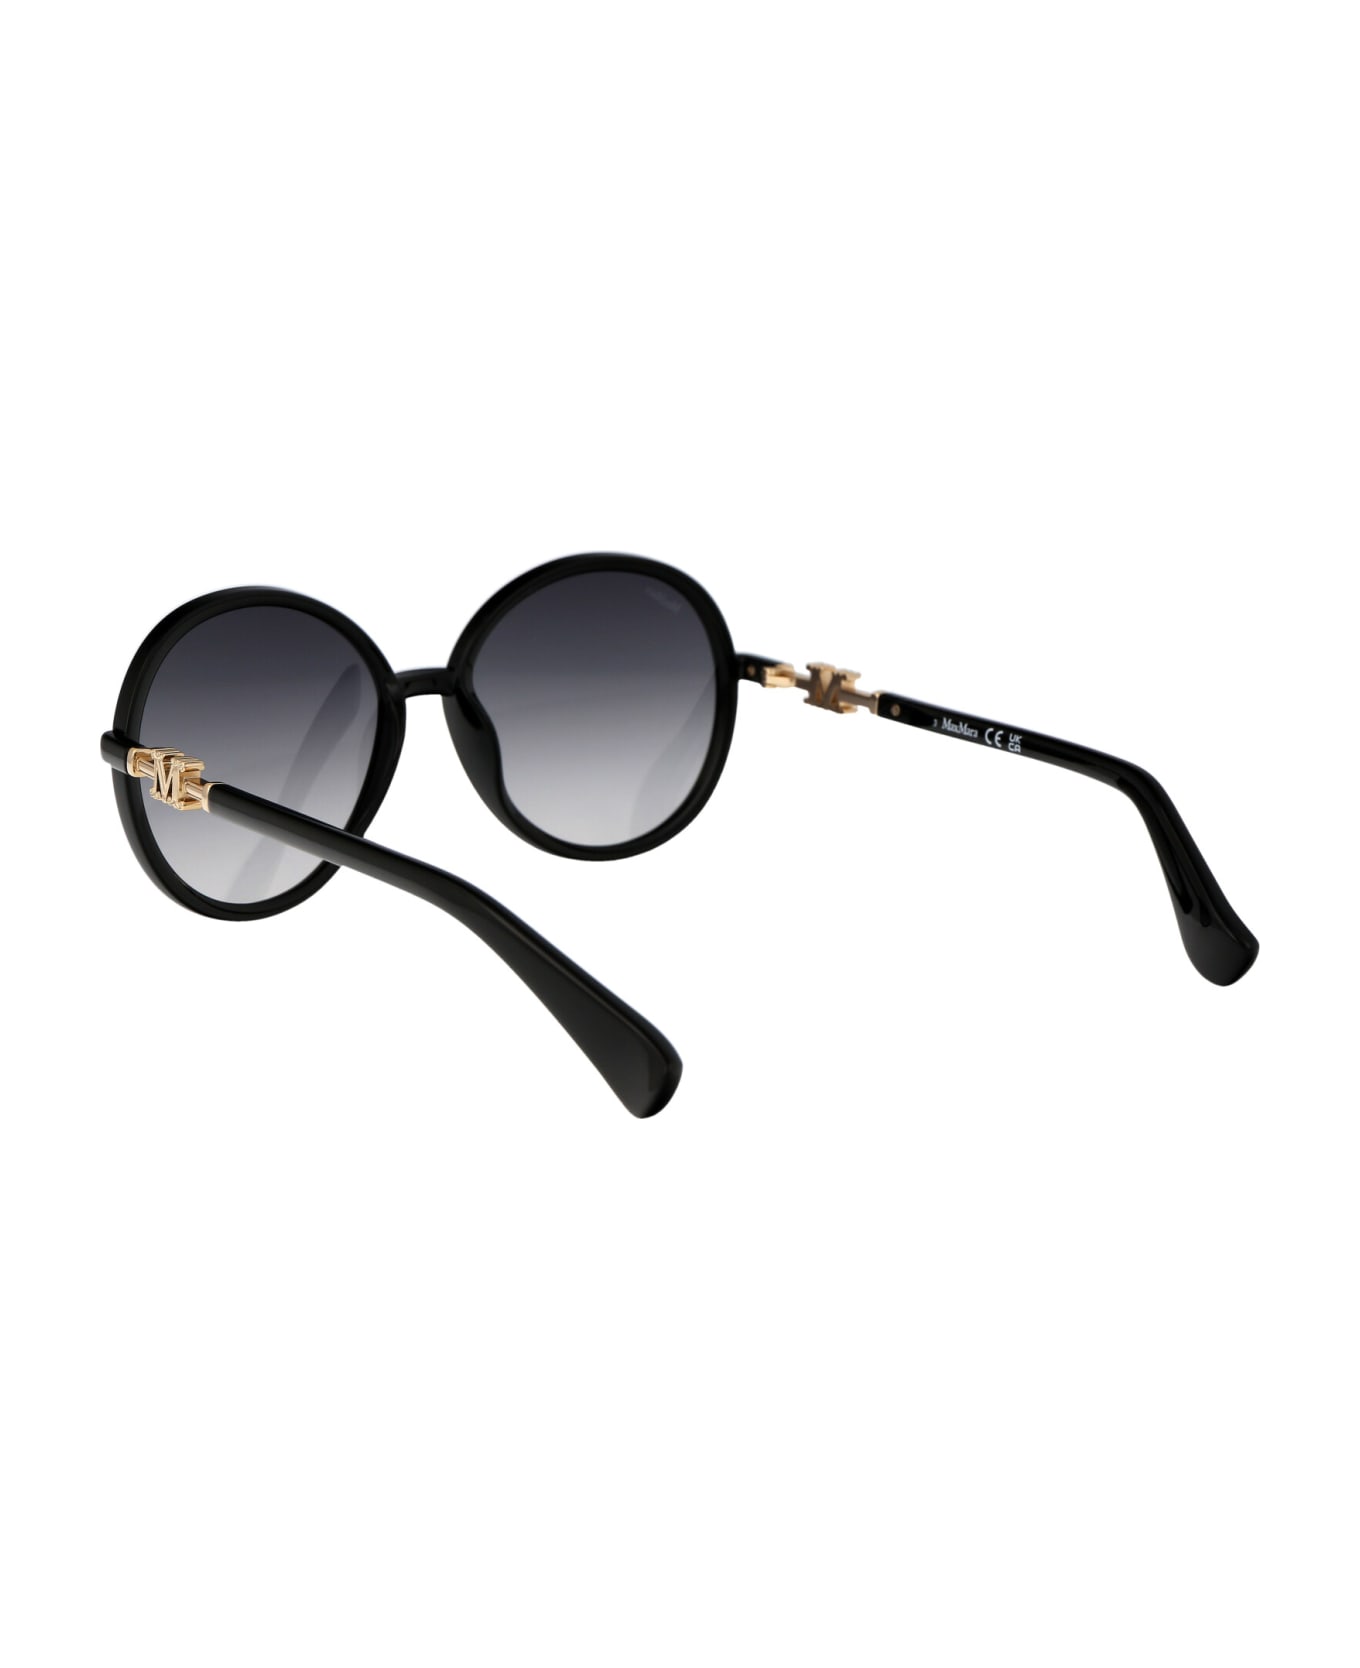 Max Mara Emme15 Sunglasses - 01B Nero Lucido/Fumo Grad サングラス